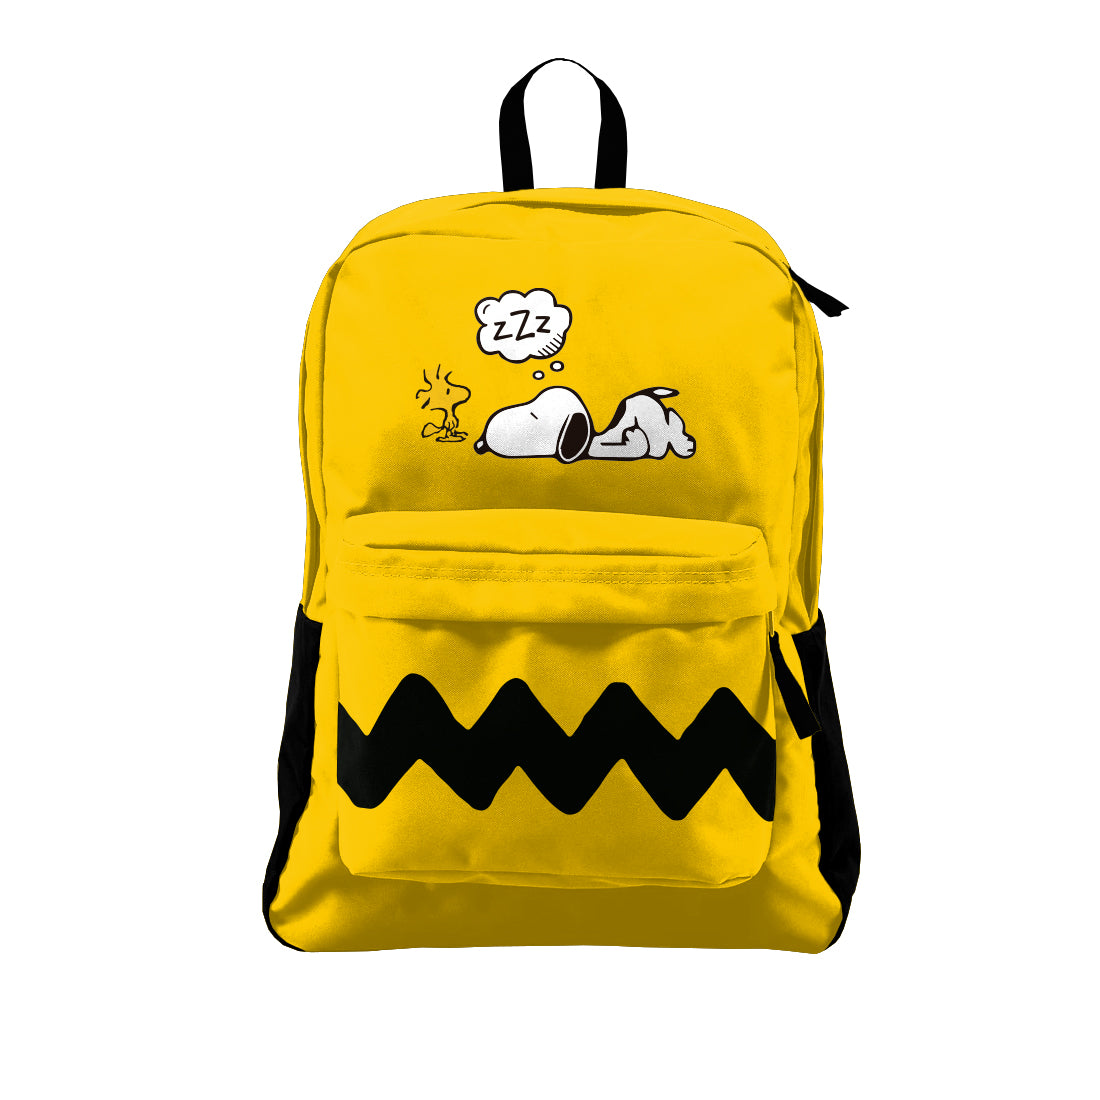 Maleta Snoopy amarilla